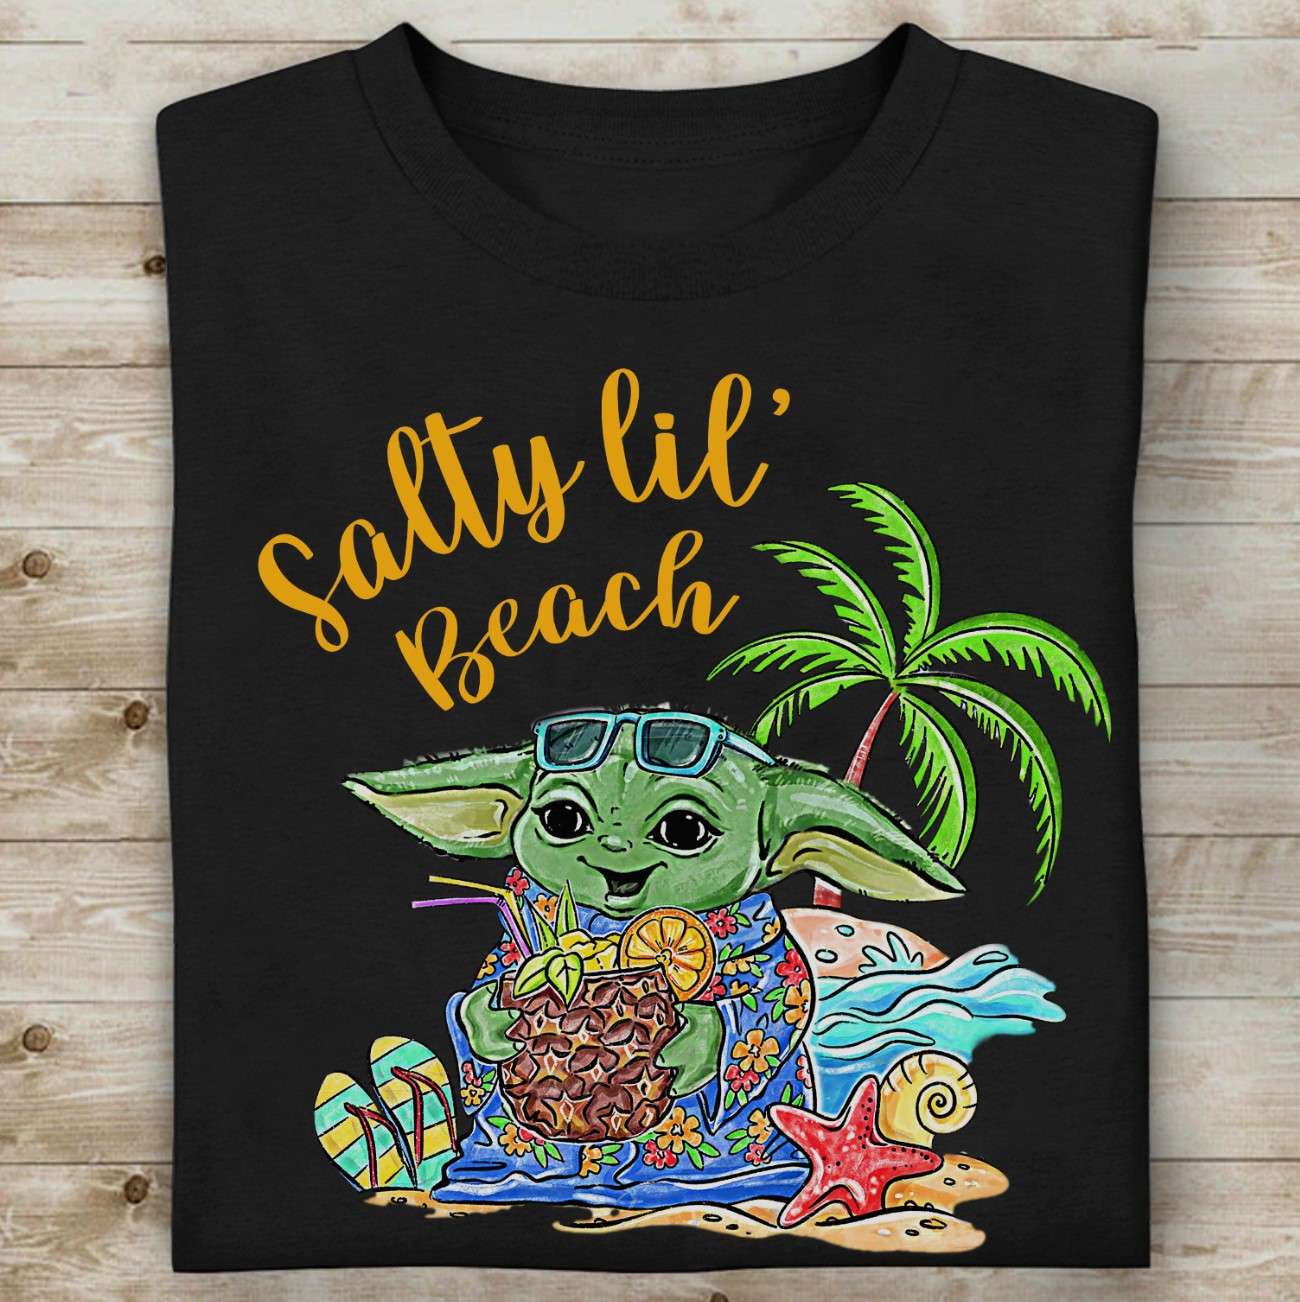 Salty lil beach - Summer vibe T-shirt, Yoda on the beach